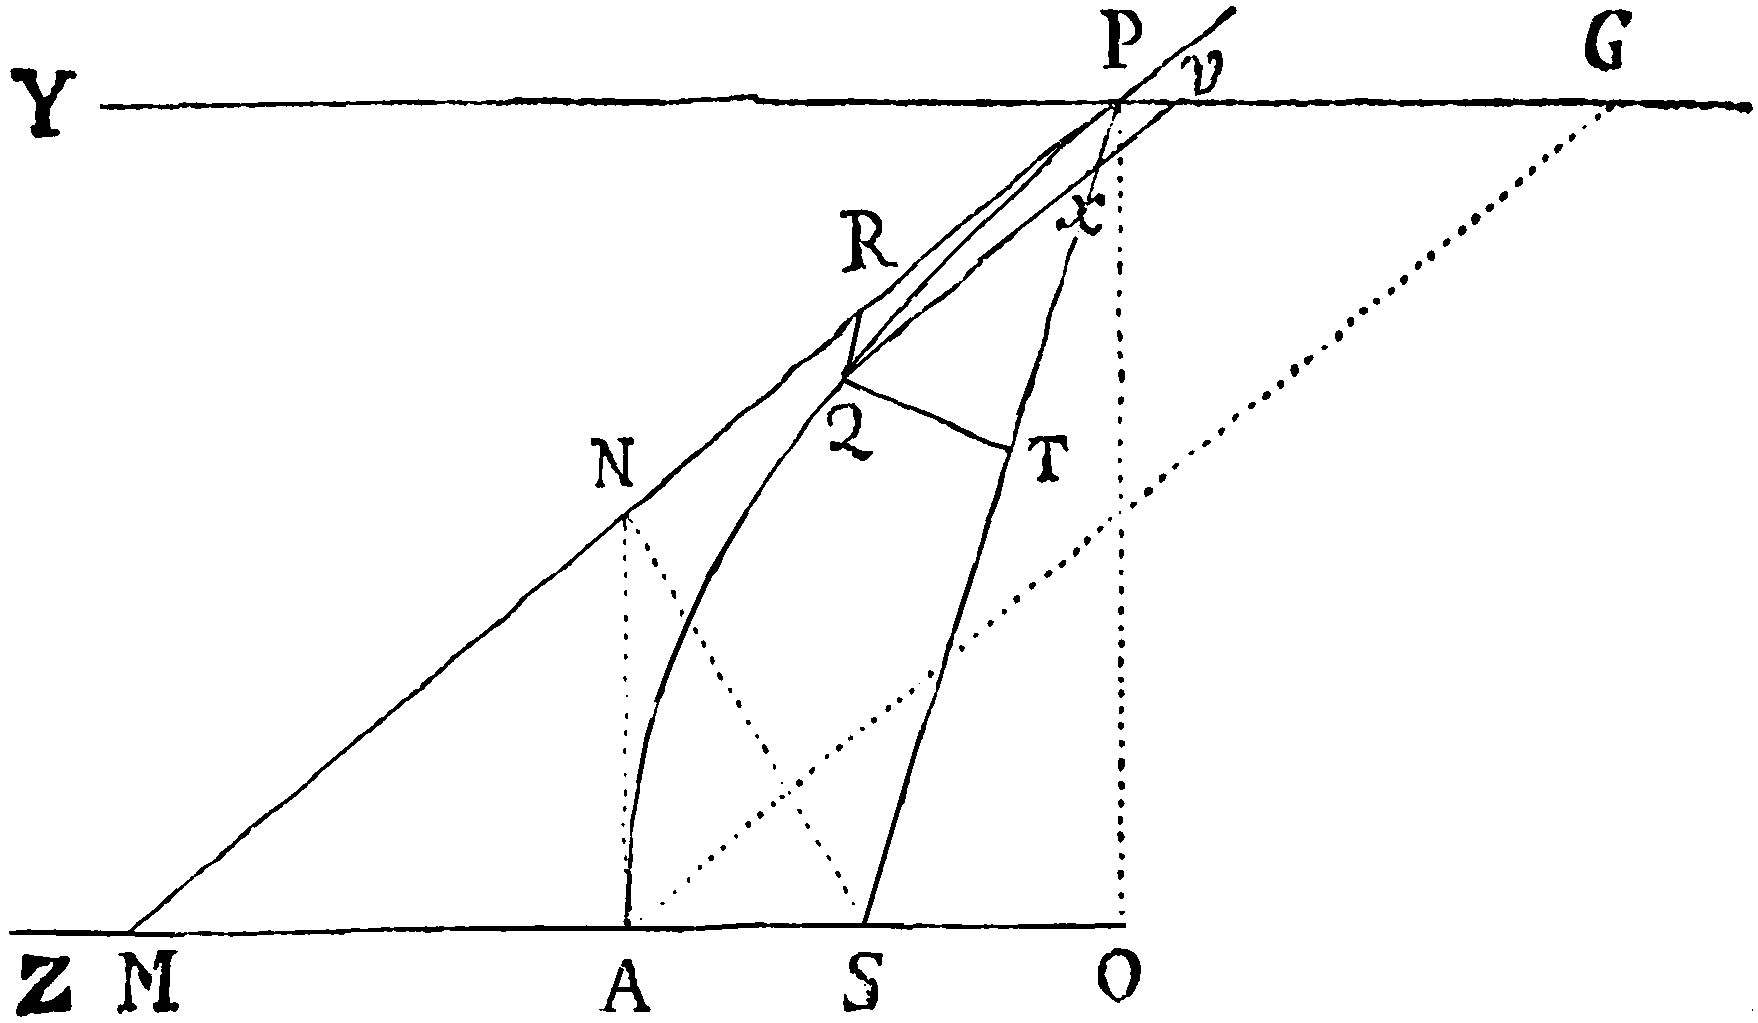 Figure for Lemma XIV.